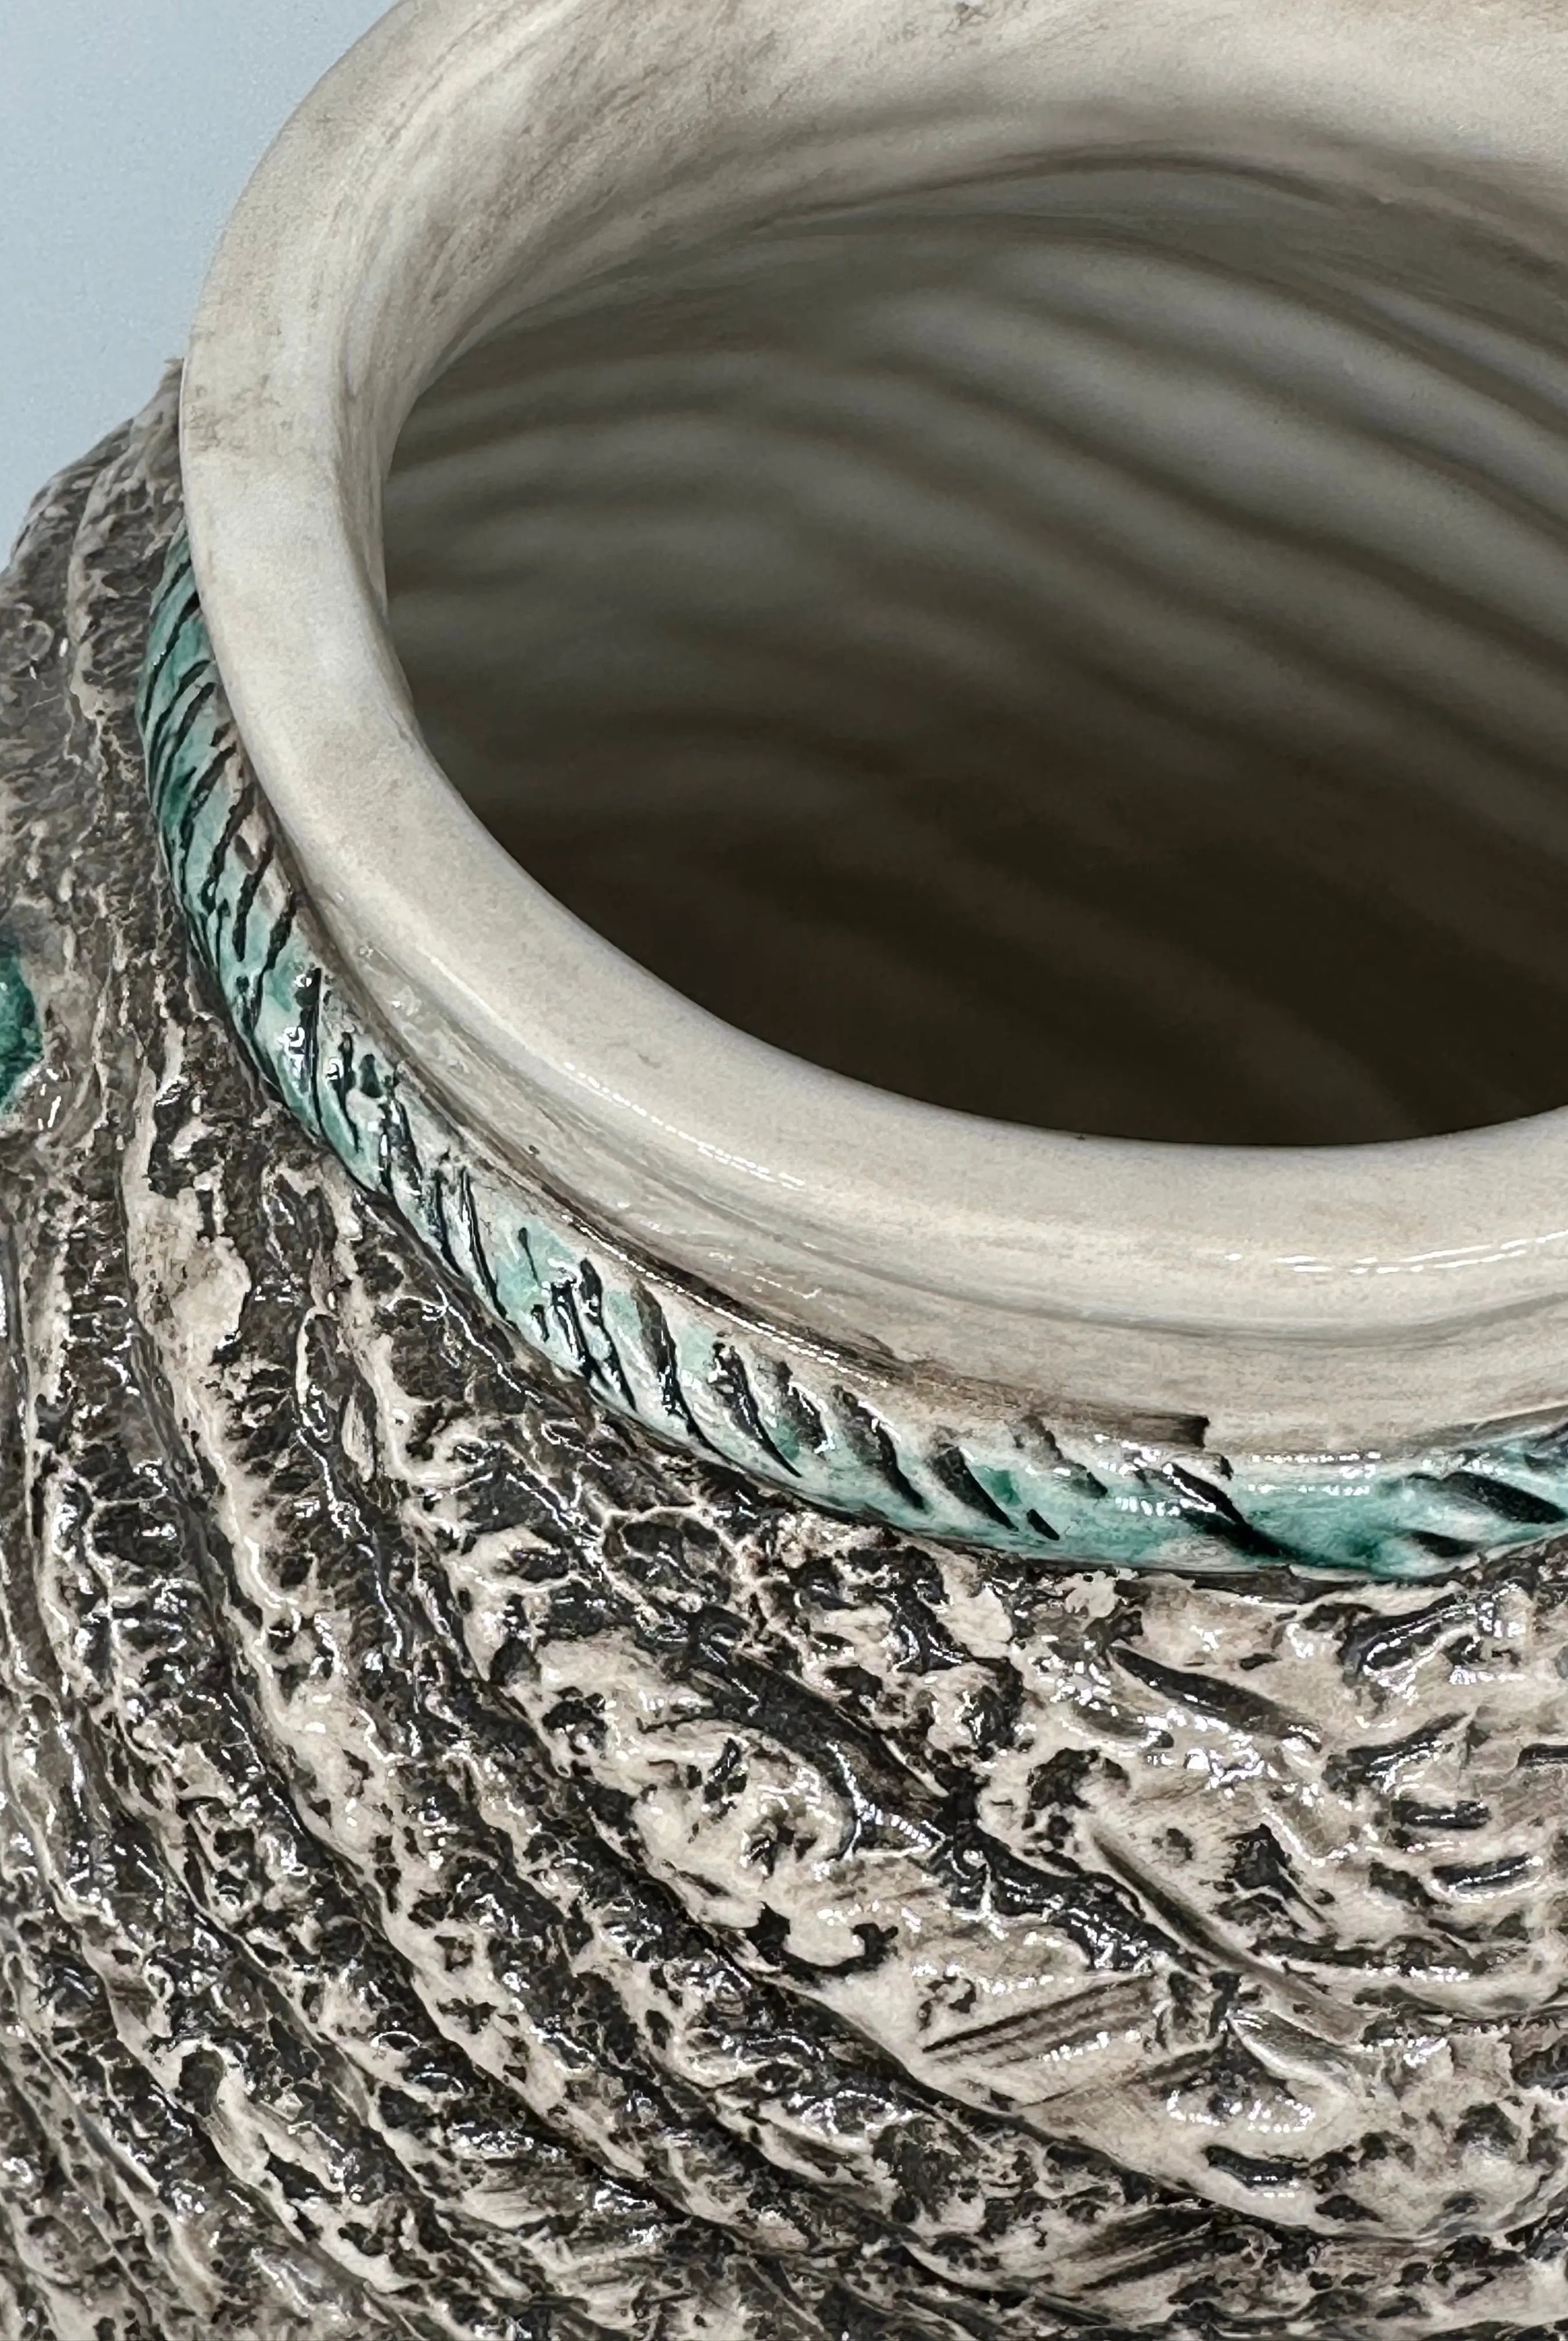 FINE SERIE - Testa di Moro Uomo Demetra Ceramica Caltagirone cm H.40 L.22 Artigianale Écru Verde Acqua DD CERAMICHE SICILIANE